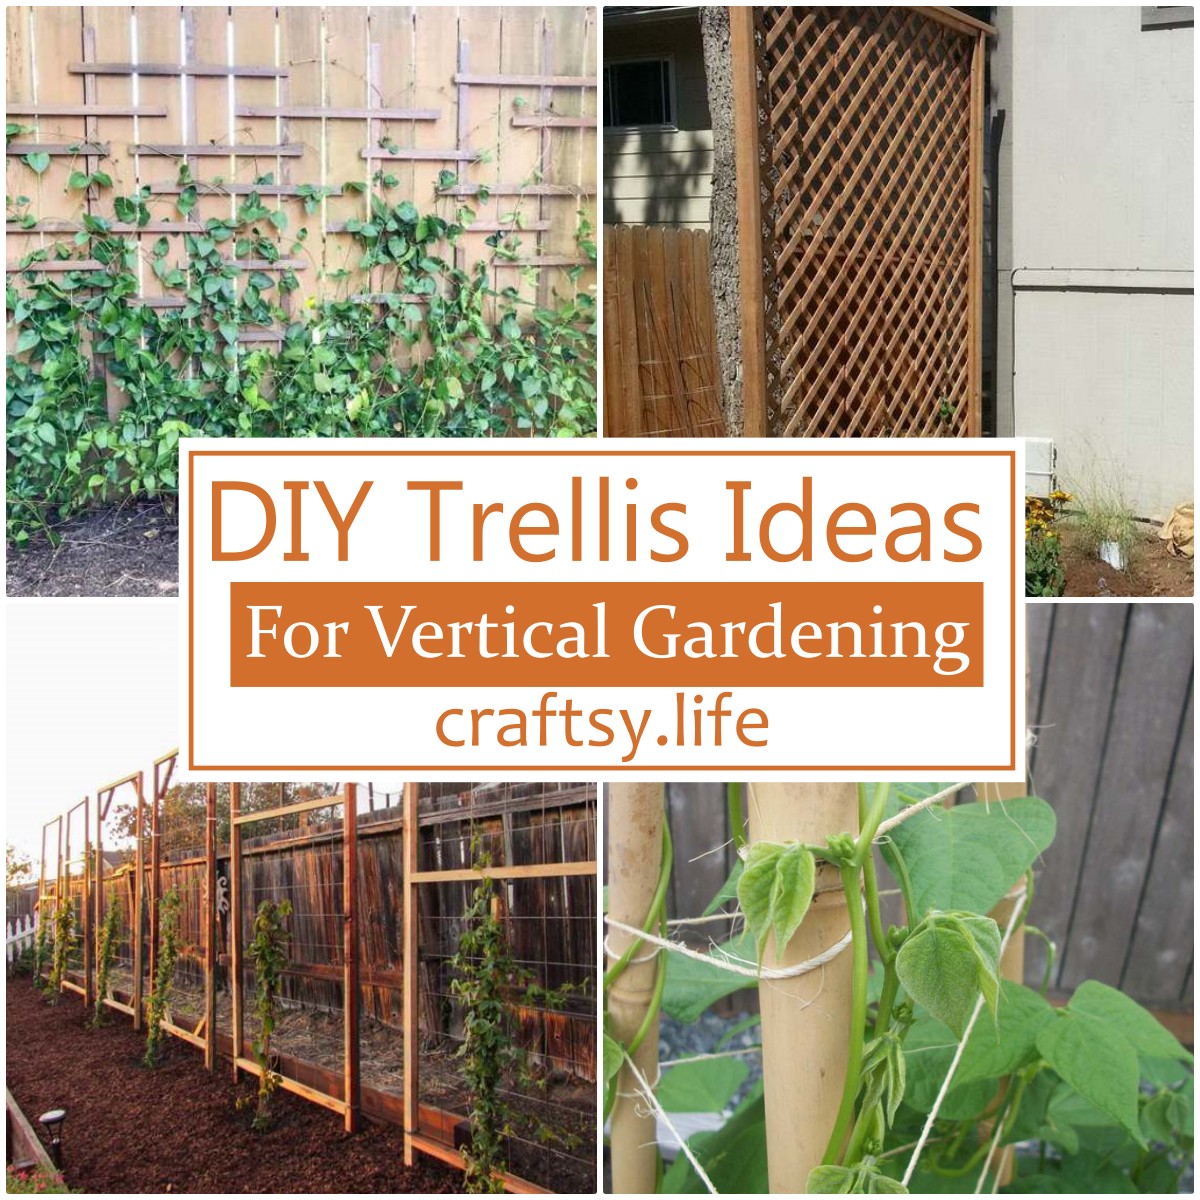 DIY Trellis Ideas For Vertical Gardening